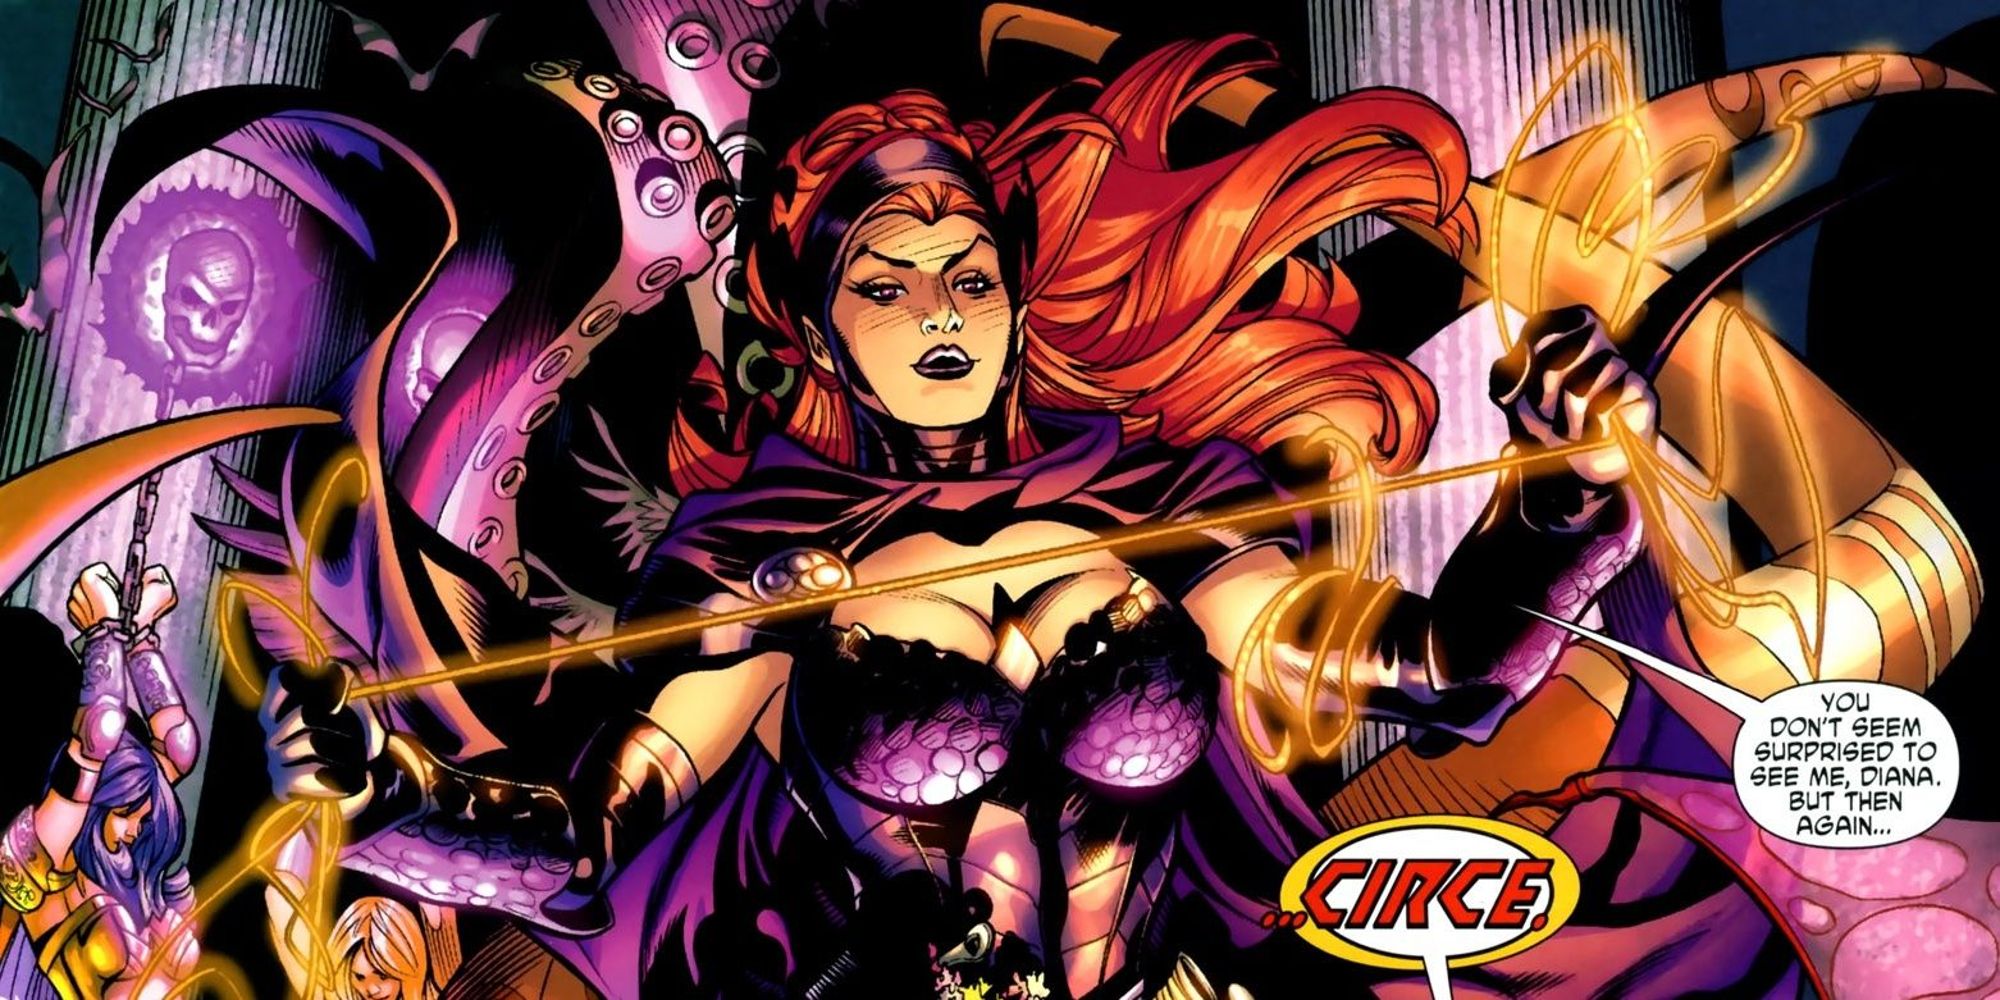 Circe taunting Wonder Woman in DC comics